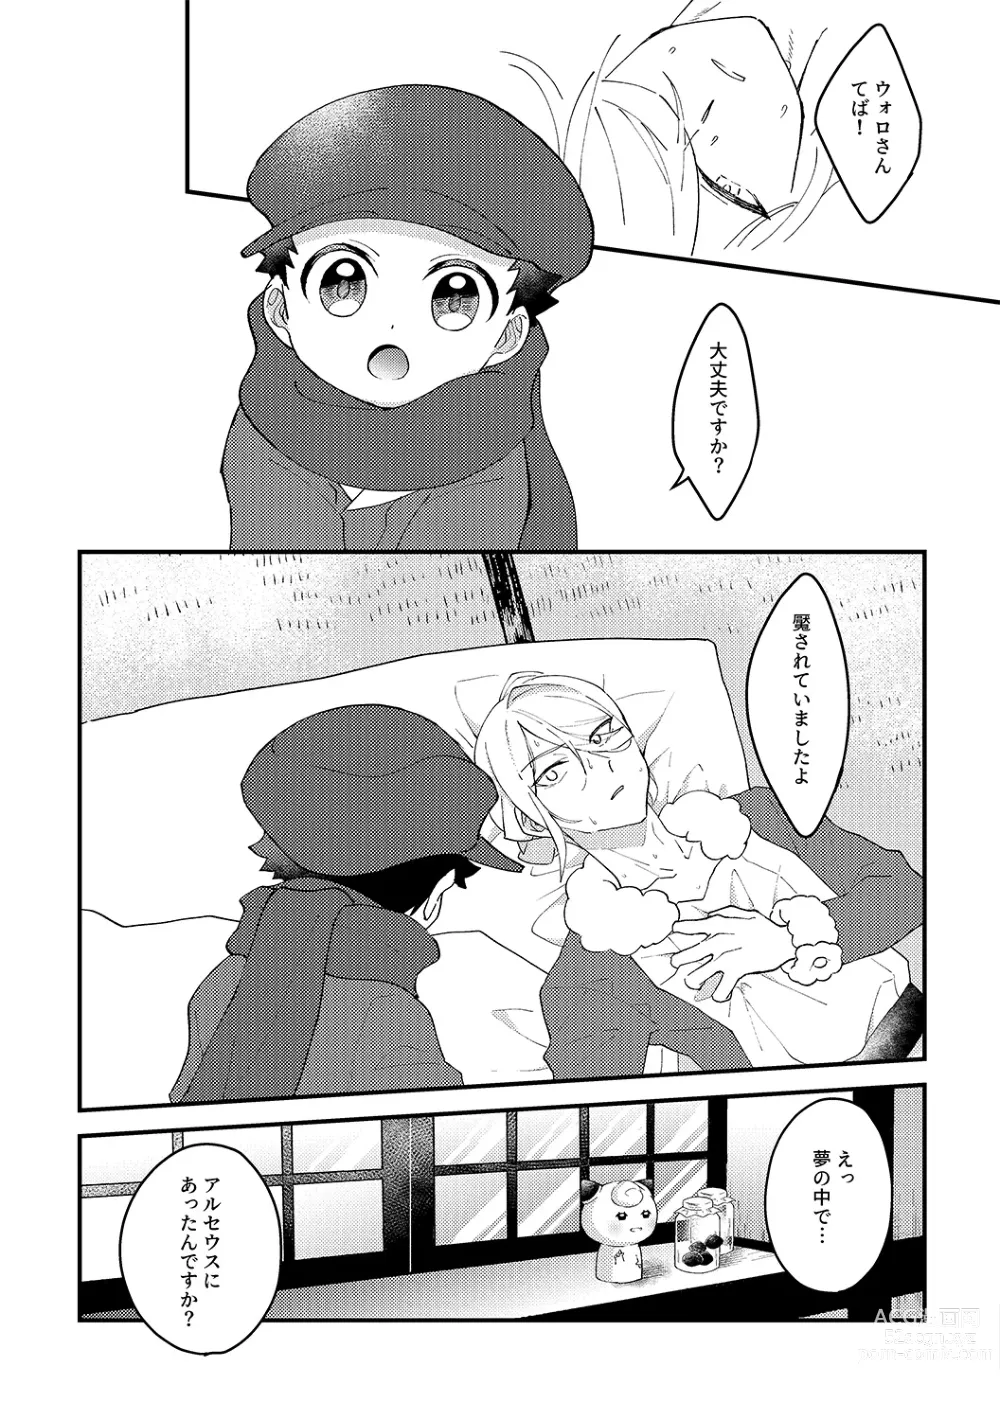 Page 6 of doujinshi Kami-sama no Kimagure